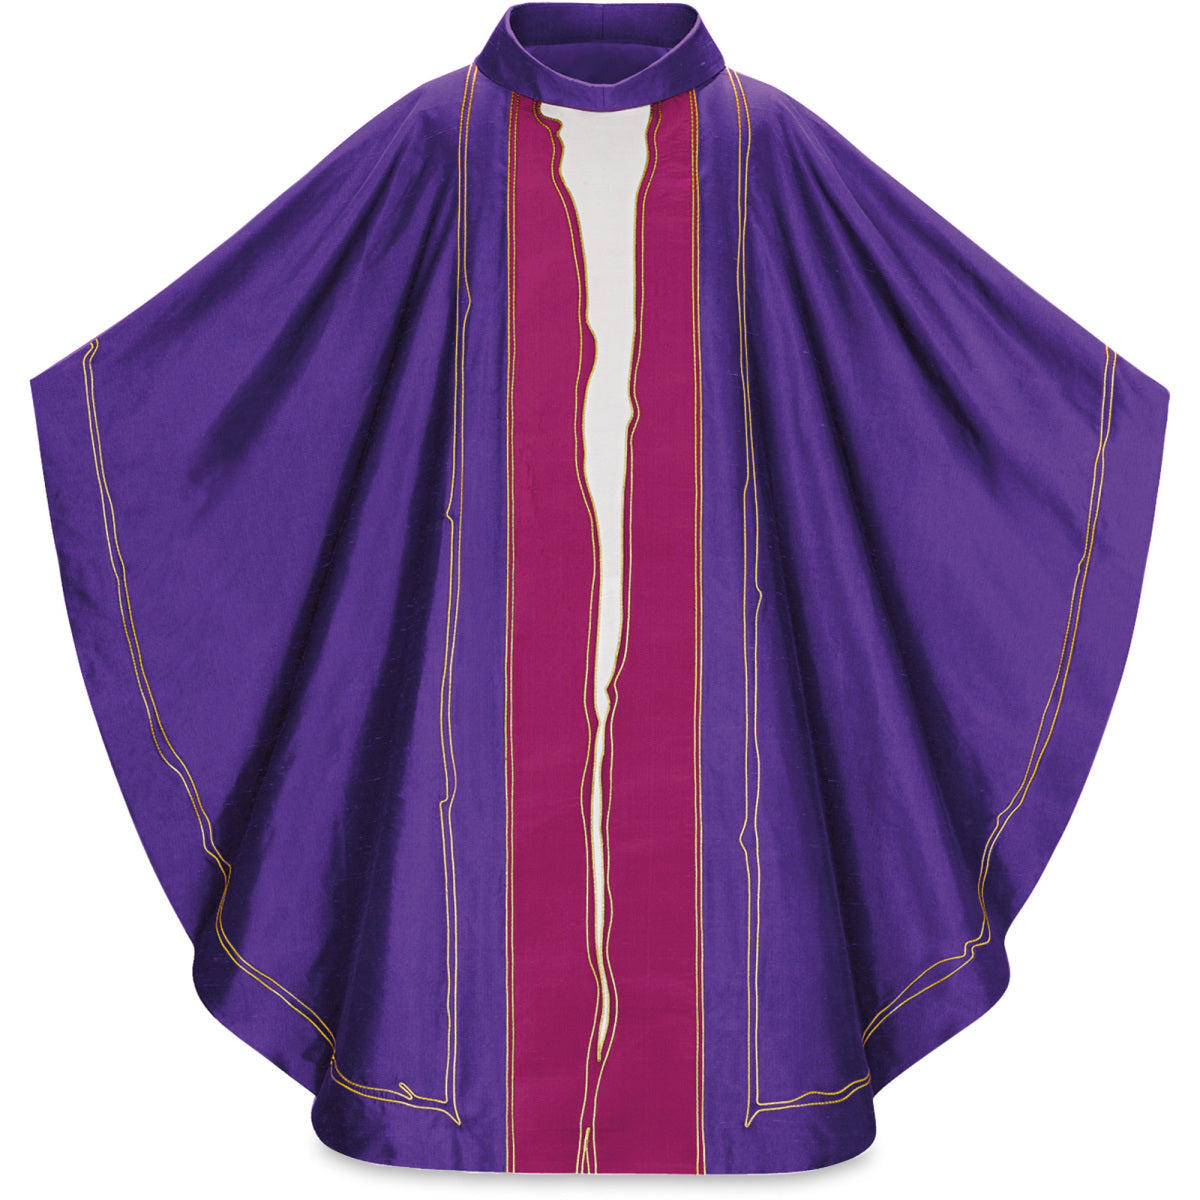 Priest Chasuble | Il Soffio